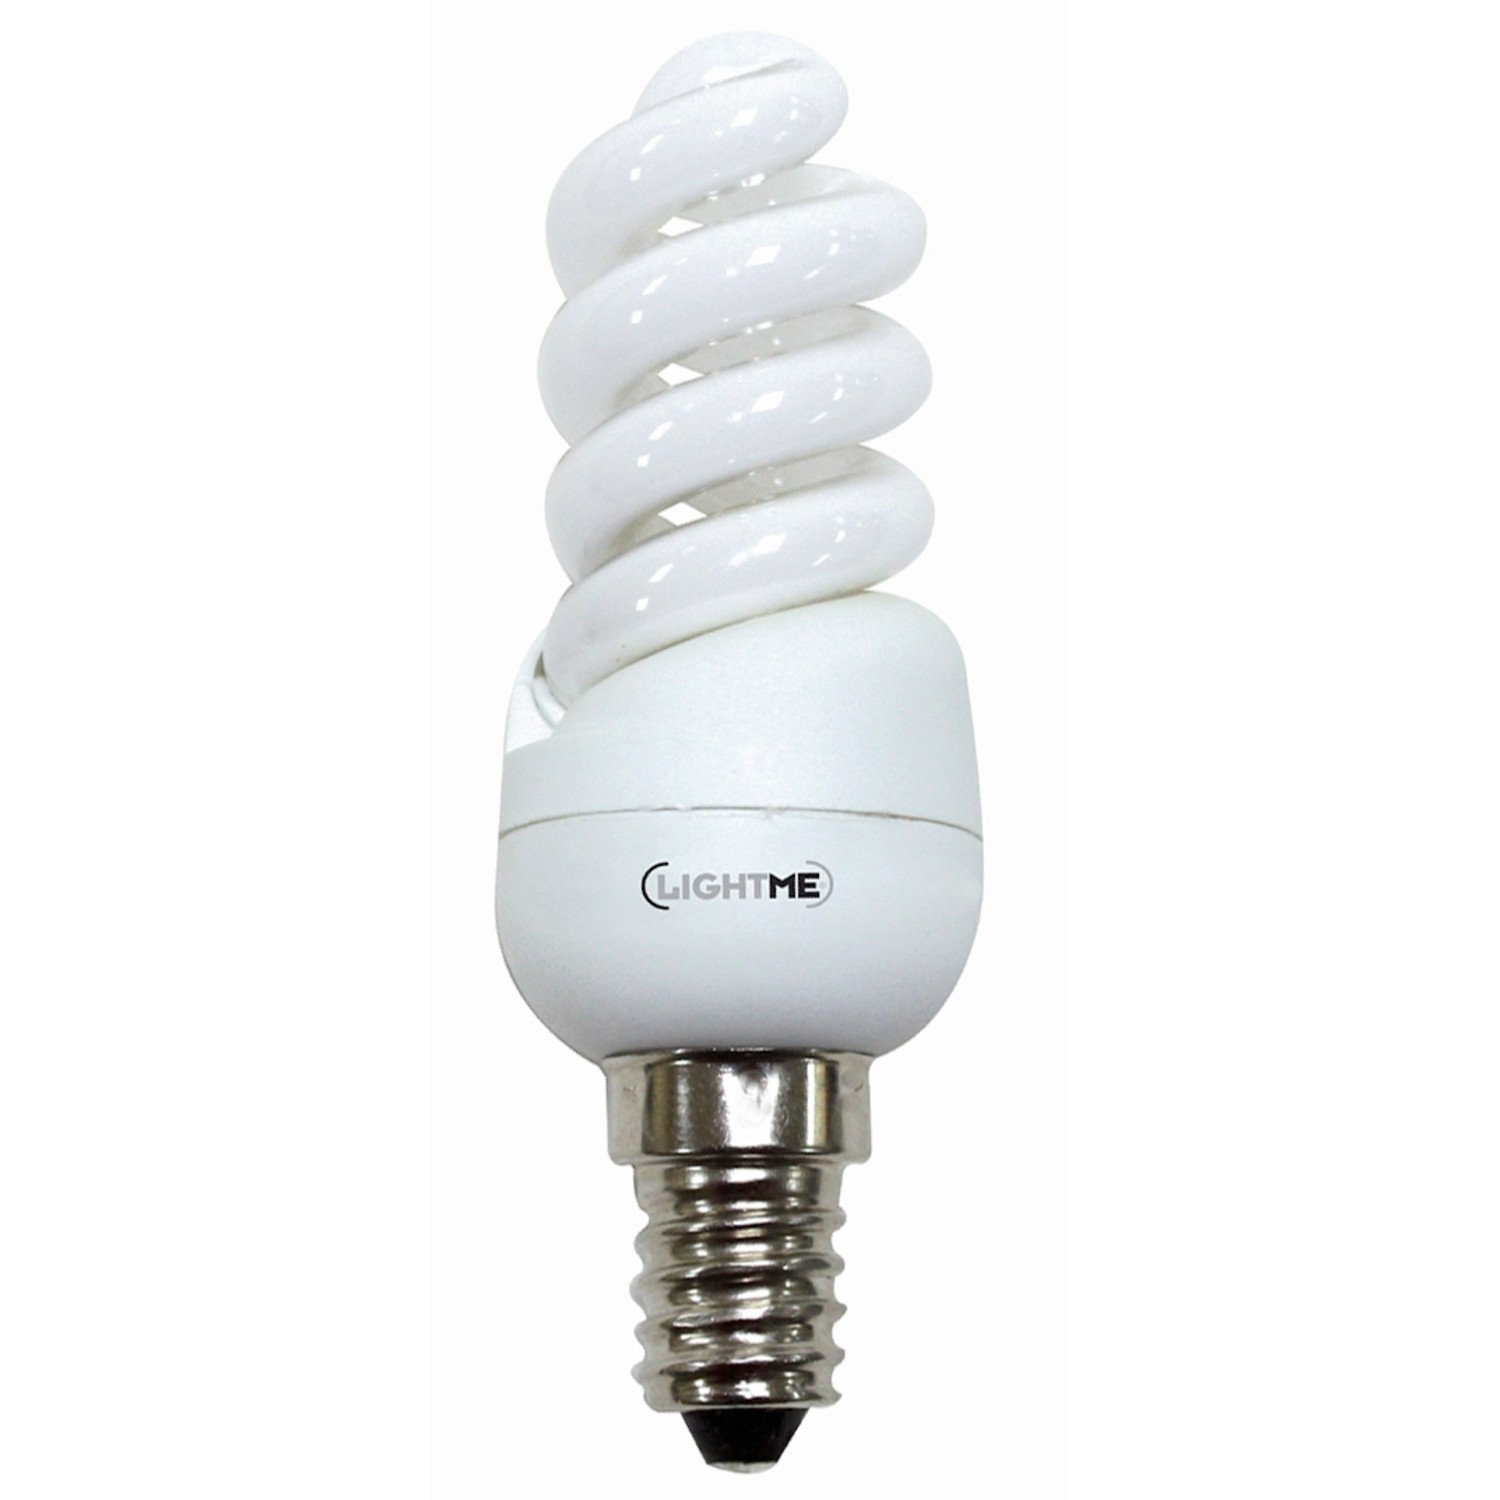  Energiesparlampe Spiralform E14 / 9 W (420 lm) Warmweiß